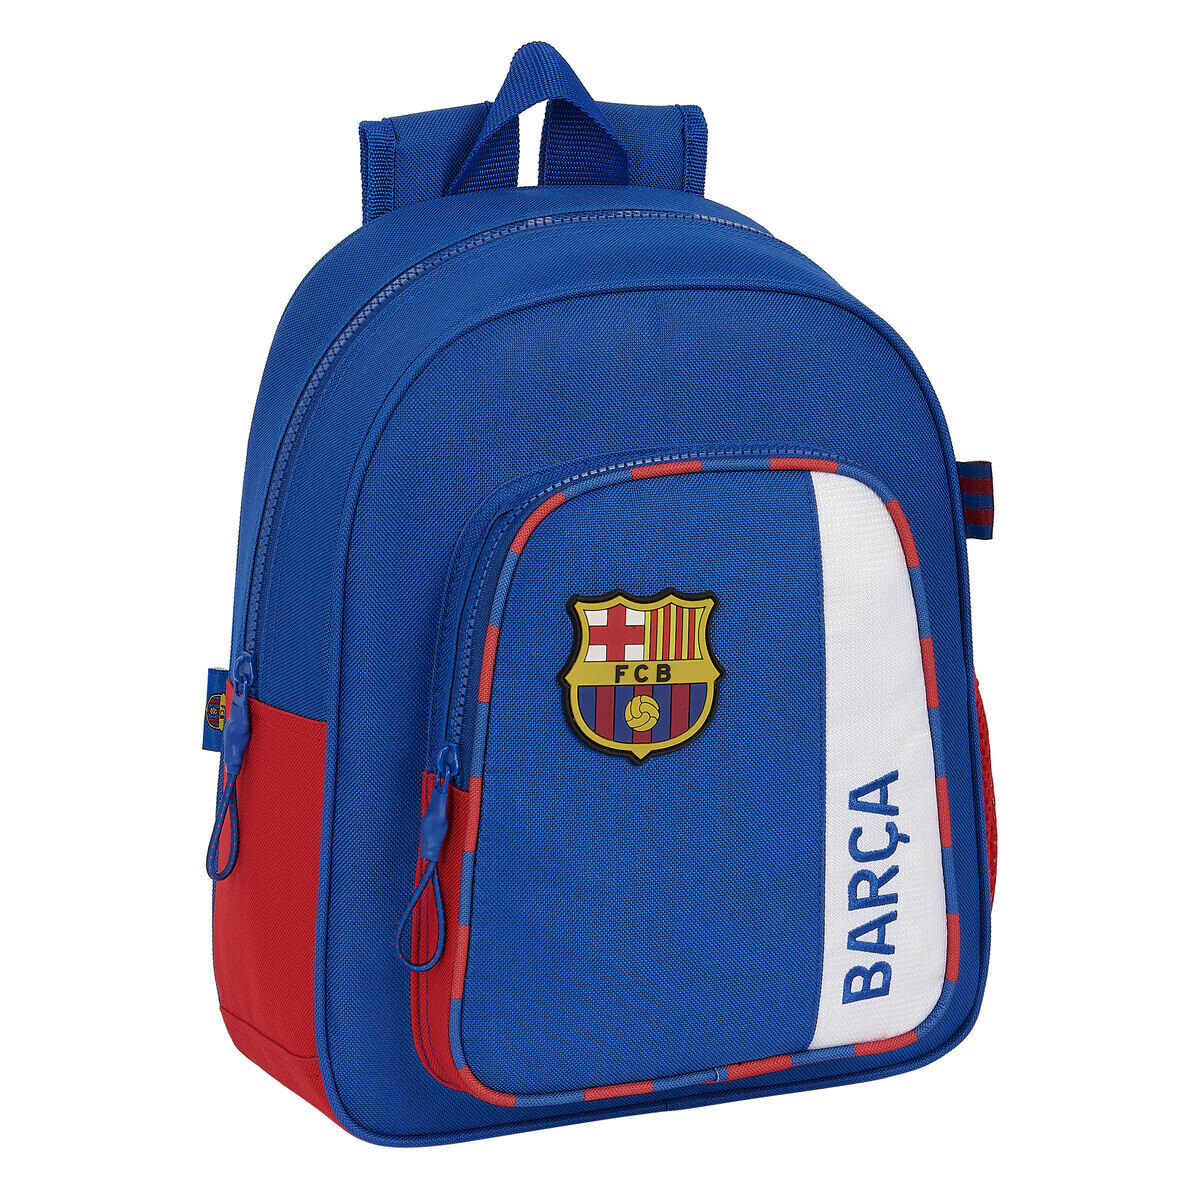 School Bag F.C. Barcelona Blue Maroon 27 x 33 x 10 cm